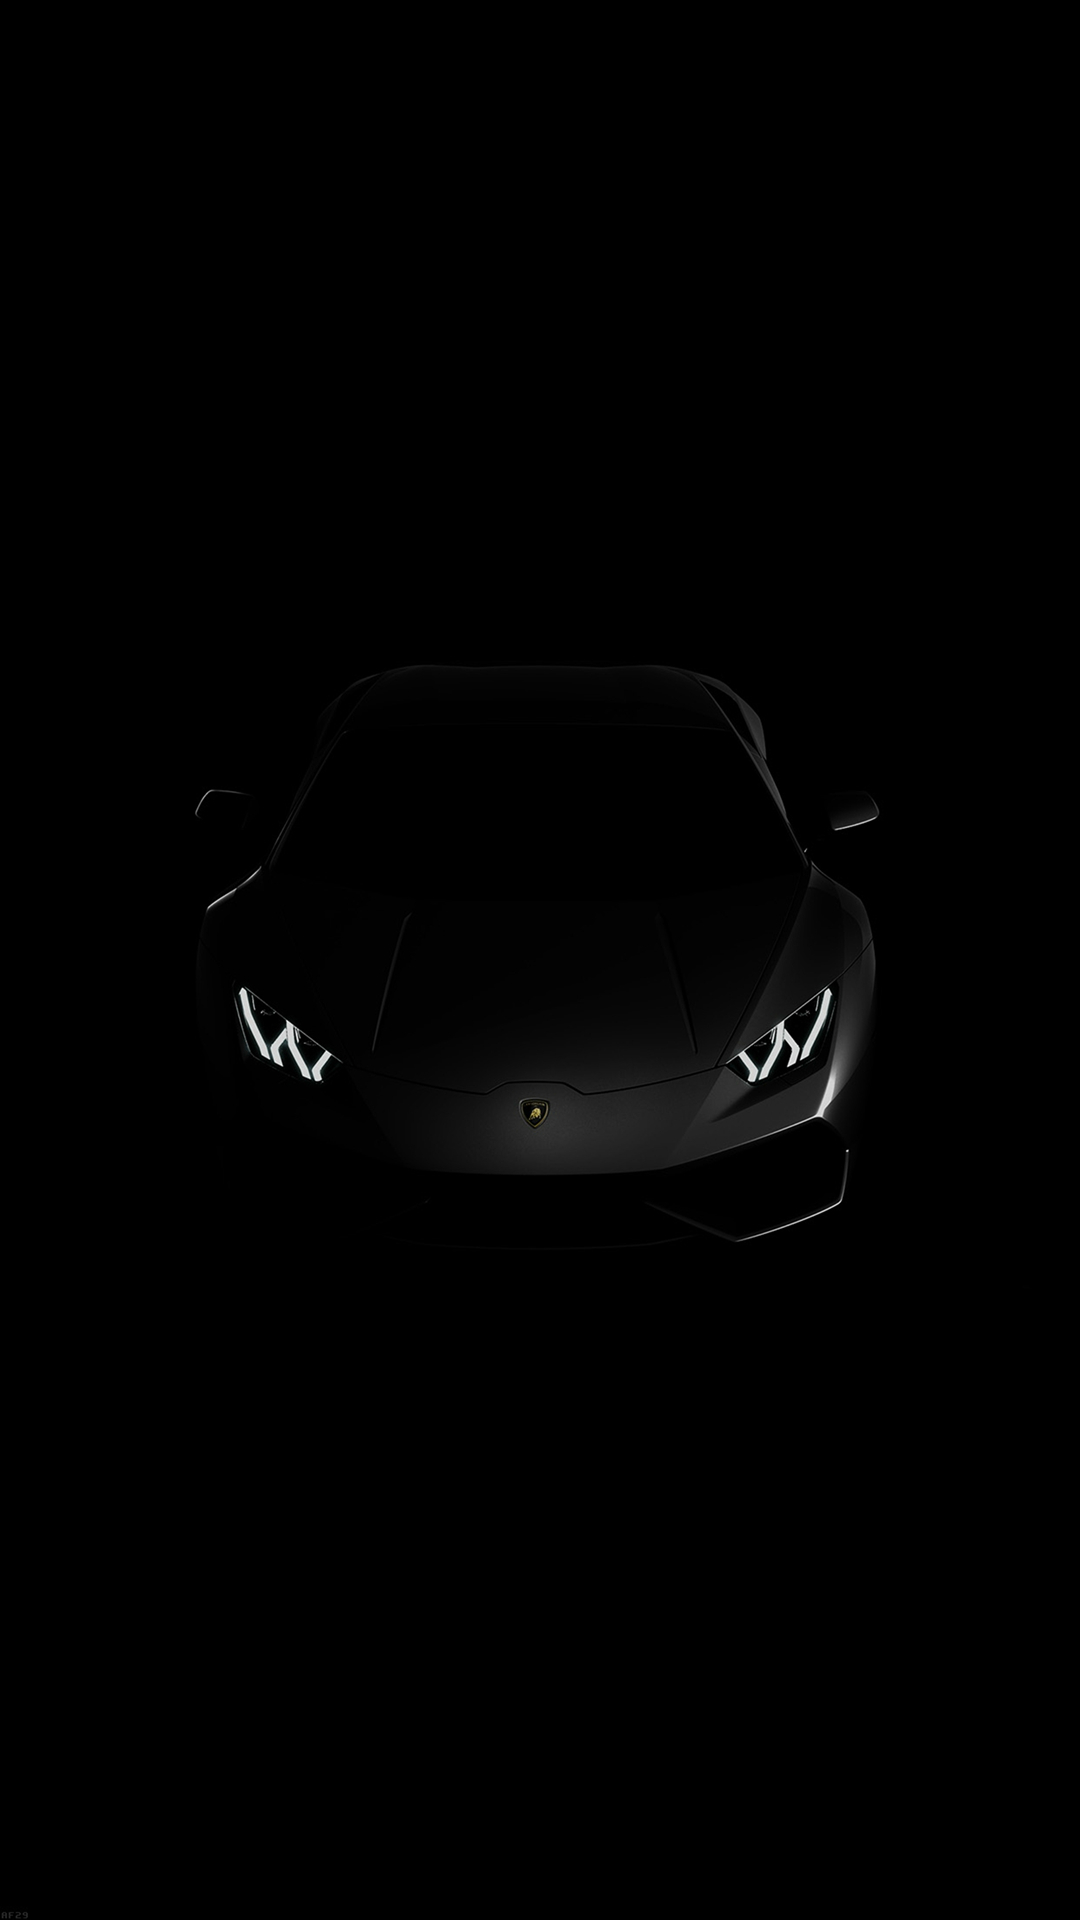 100 Wallpaper Iphone 6s Lamborghini Hinhanhsieudep Net